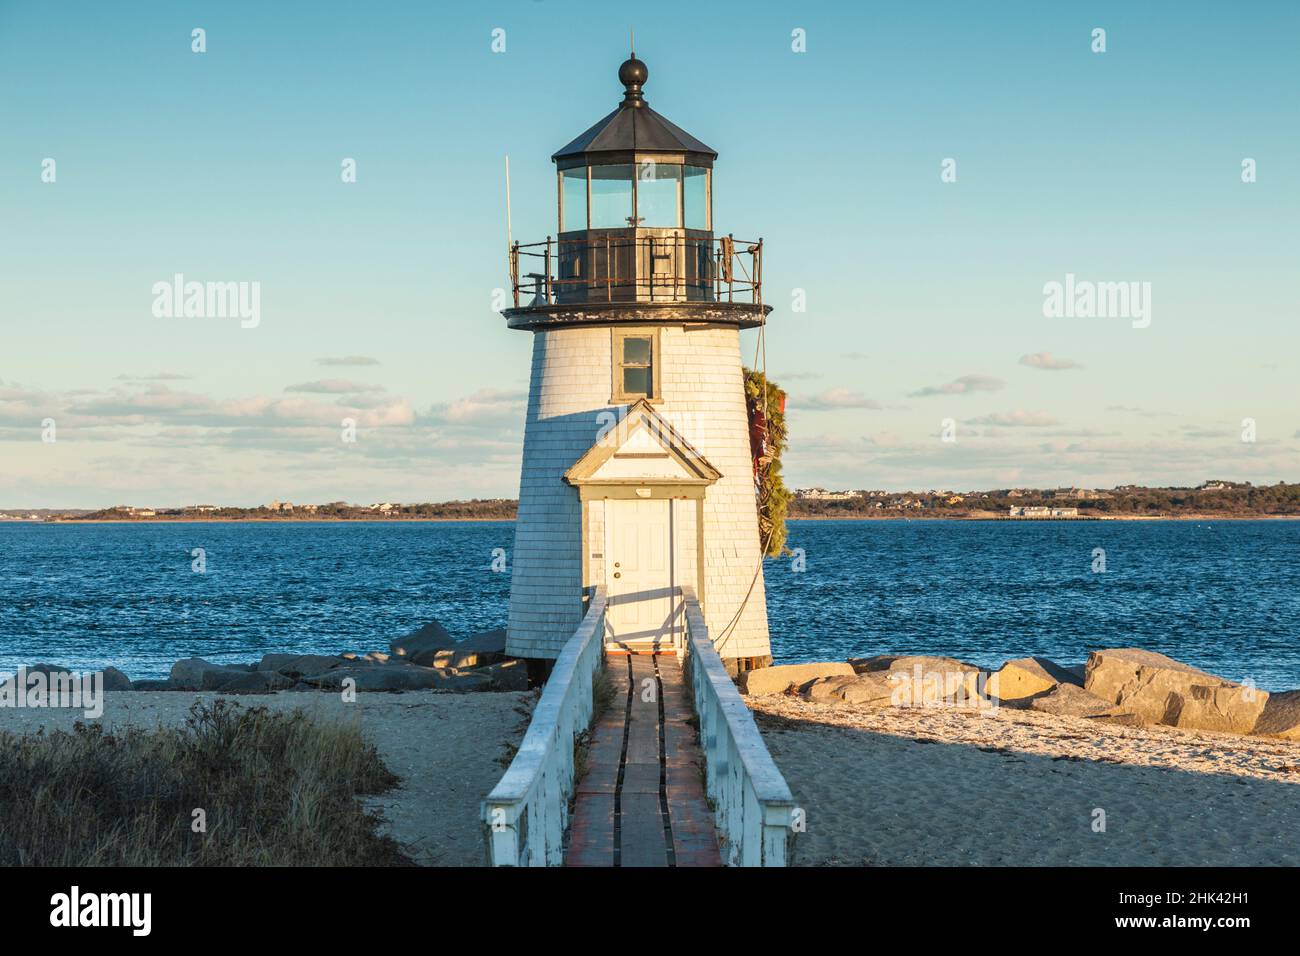 États-Unis, Massachusetts, Nantucket Island. Nantucket Town, Brant point Lighthouse avec une couronne de Noël. Banque D'Images